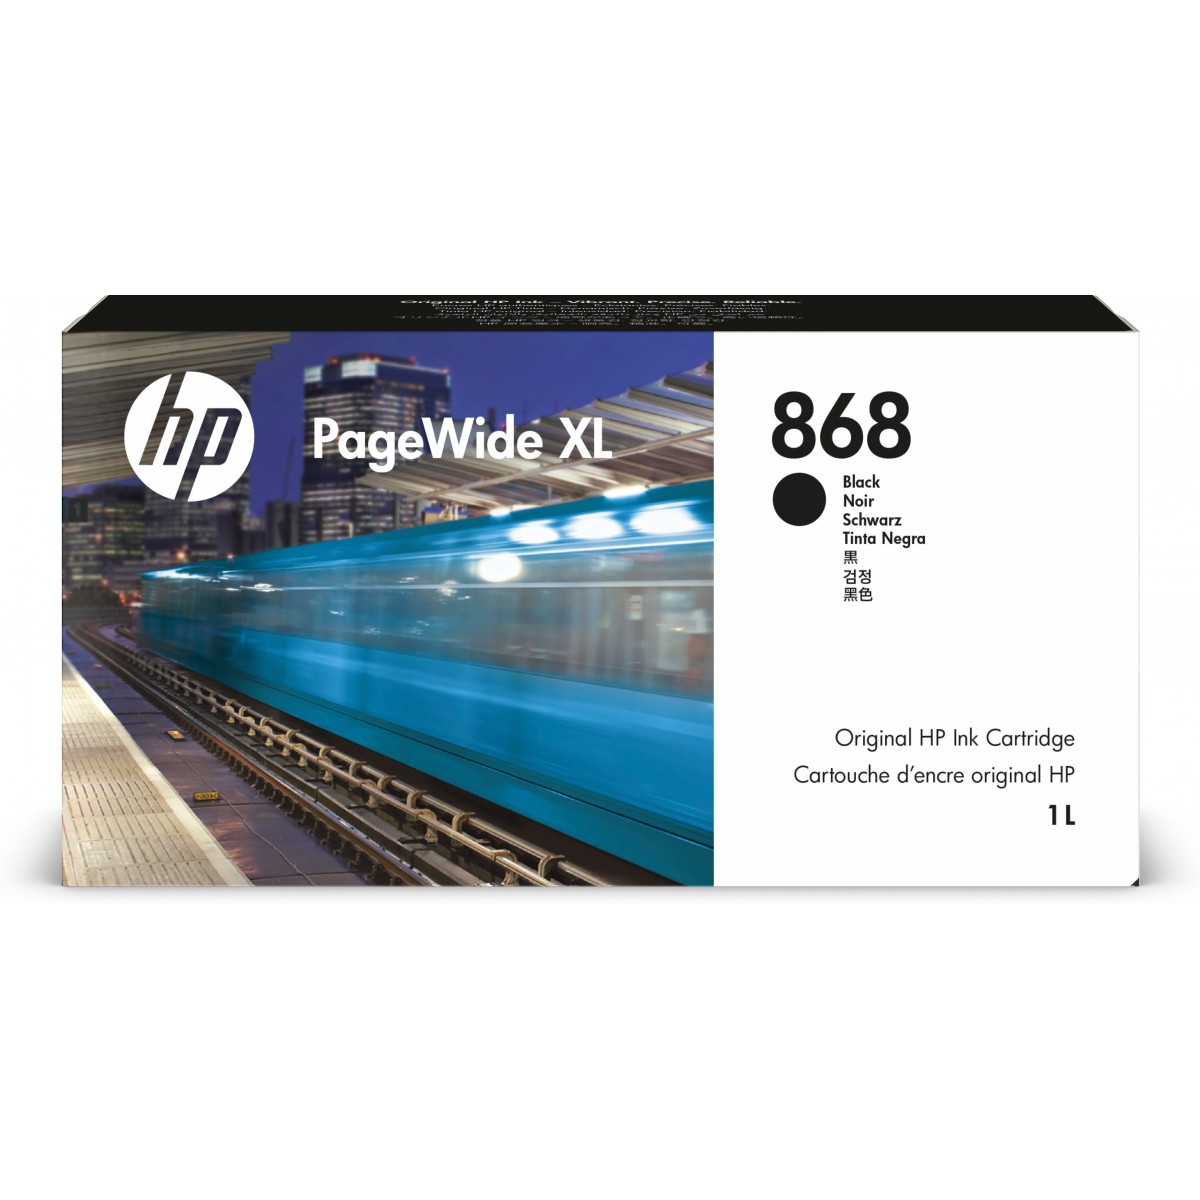 HP Ink/868 1l PageWide XL BK